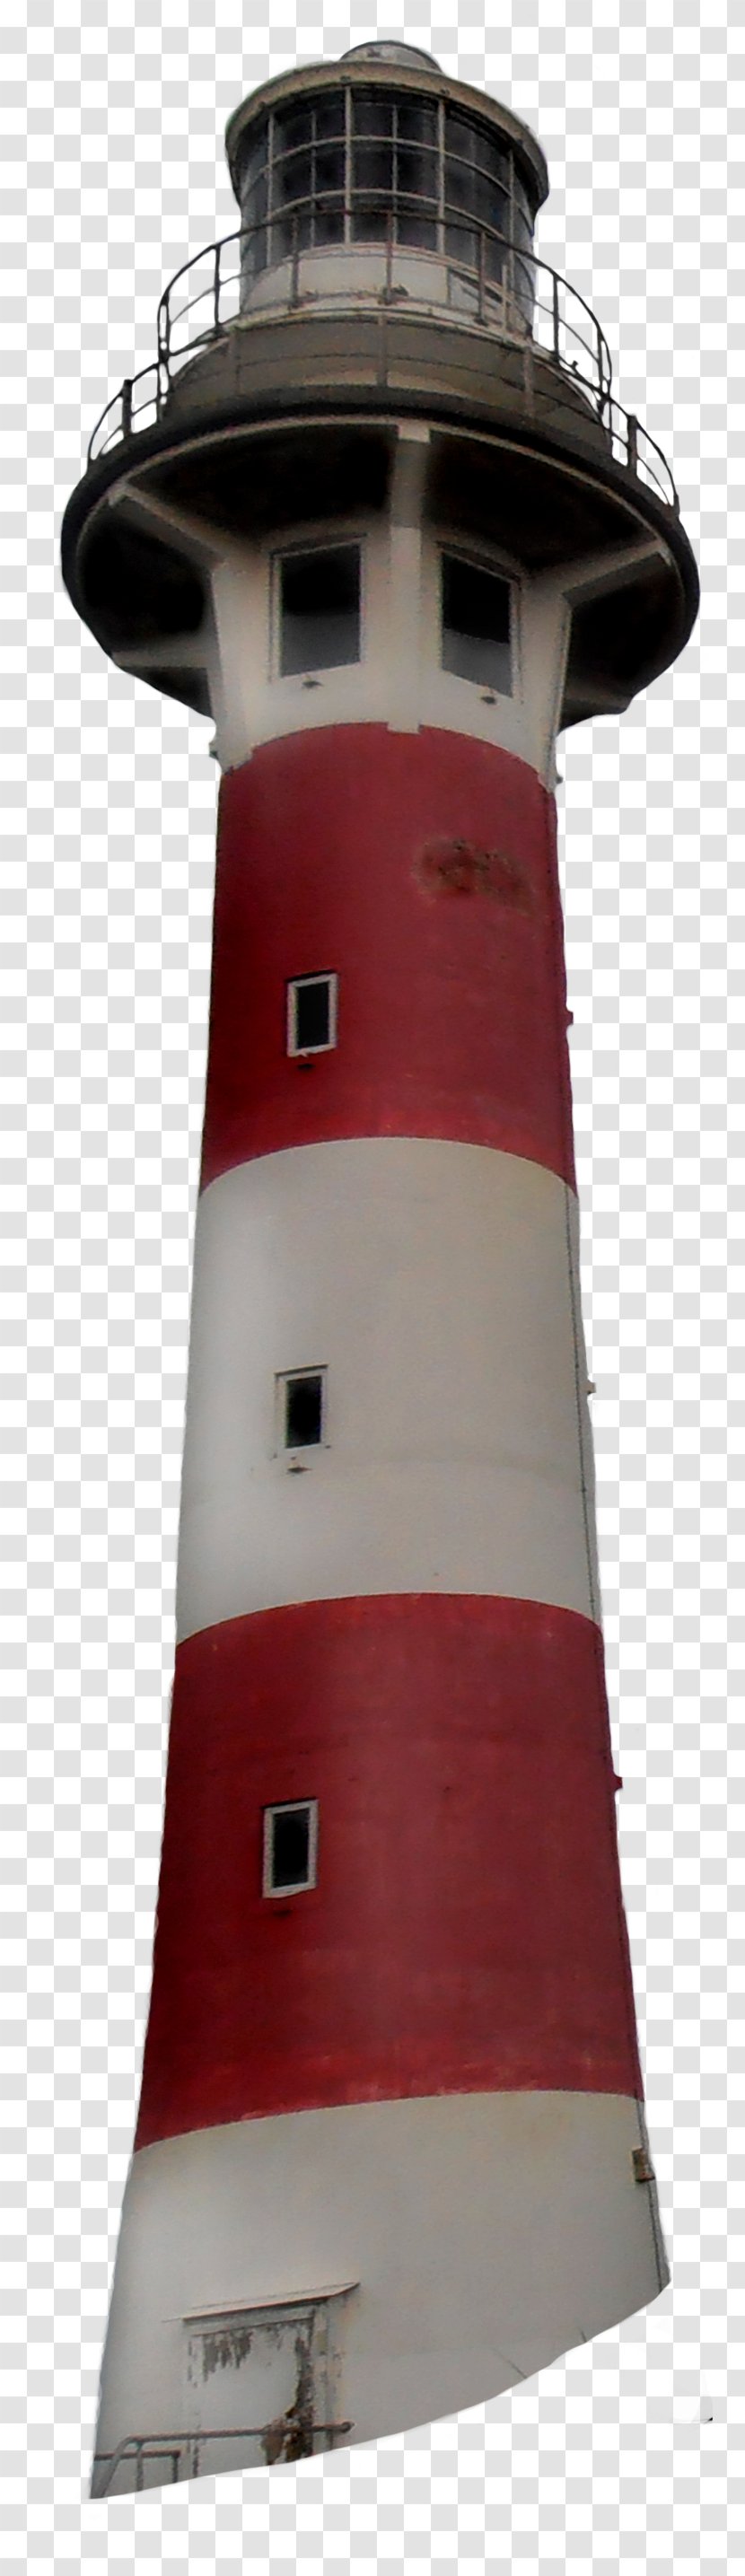 Lighthouse Tower - Deviantart Transparent PNG